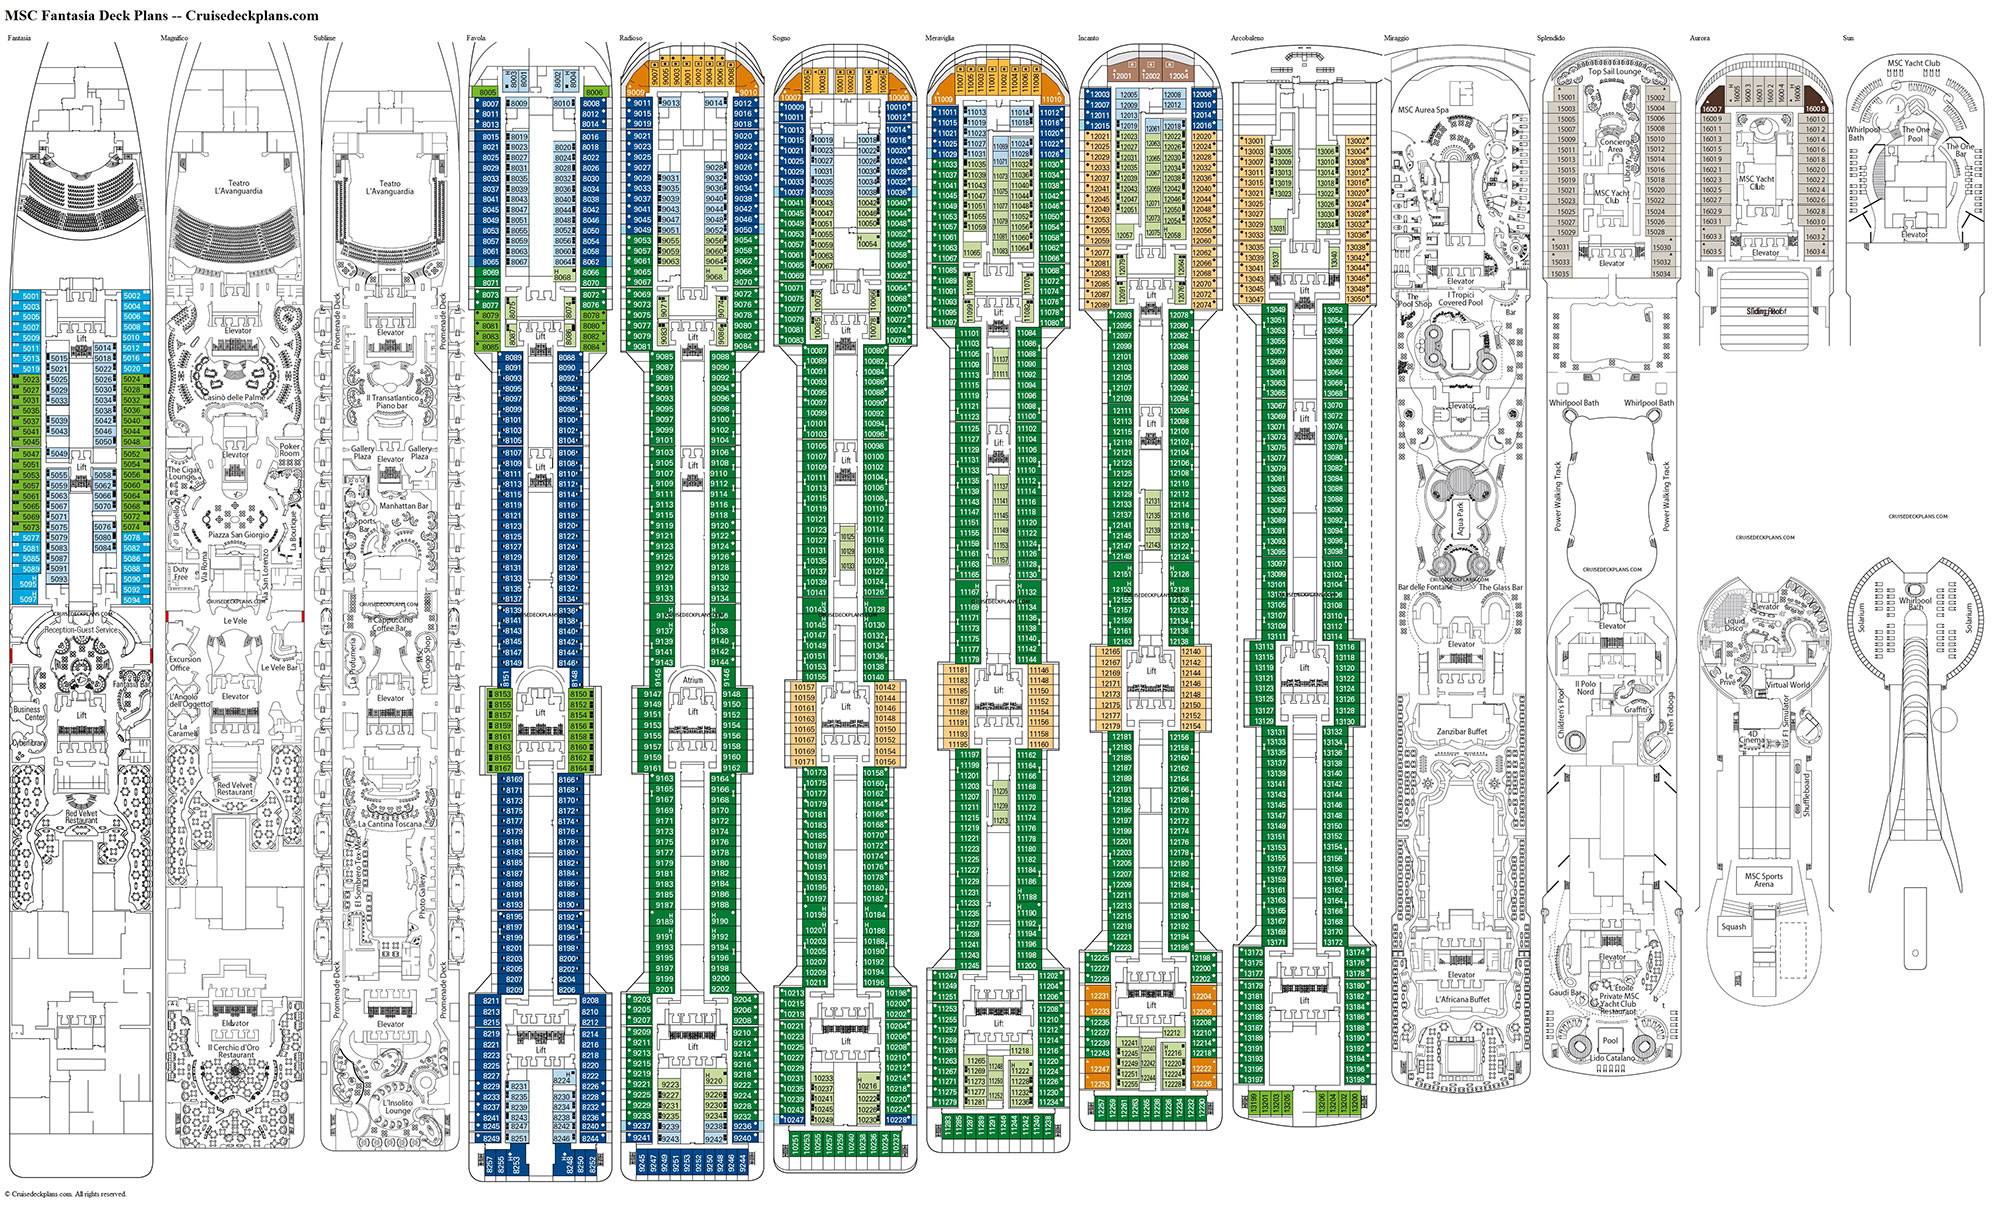 Deck plan of the MSC Fantasia